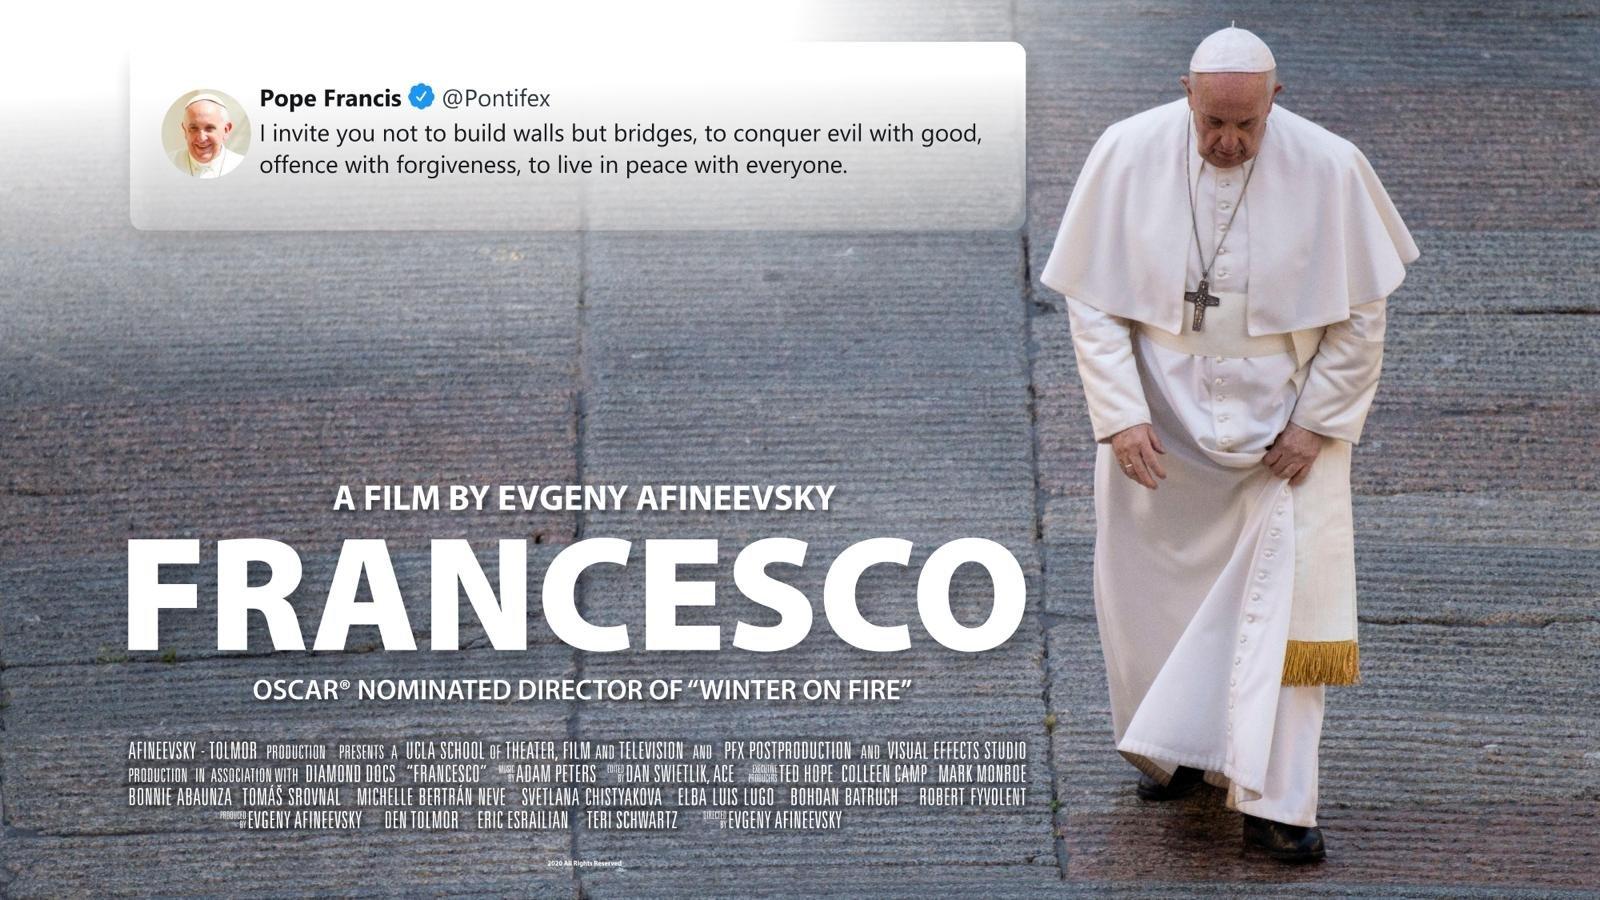 Vatican hosts screening of film that invented papal soundbite on civil unions